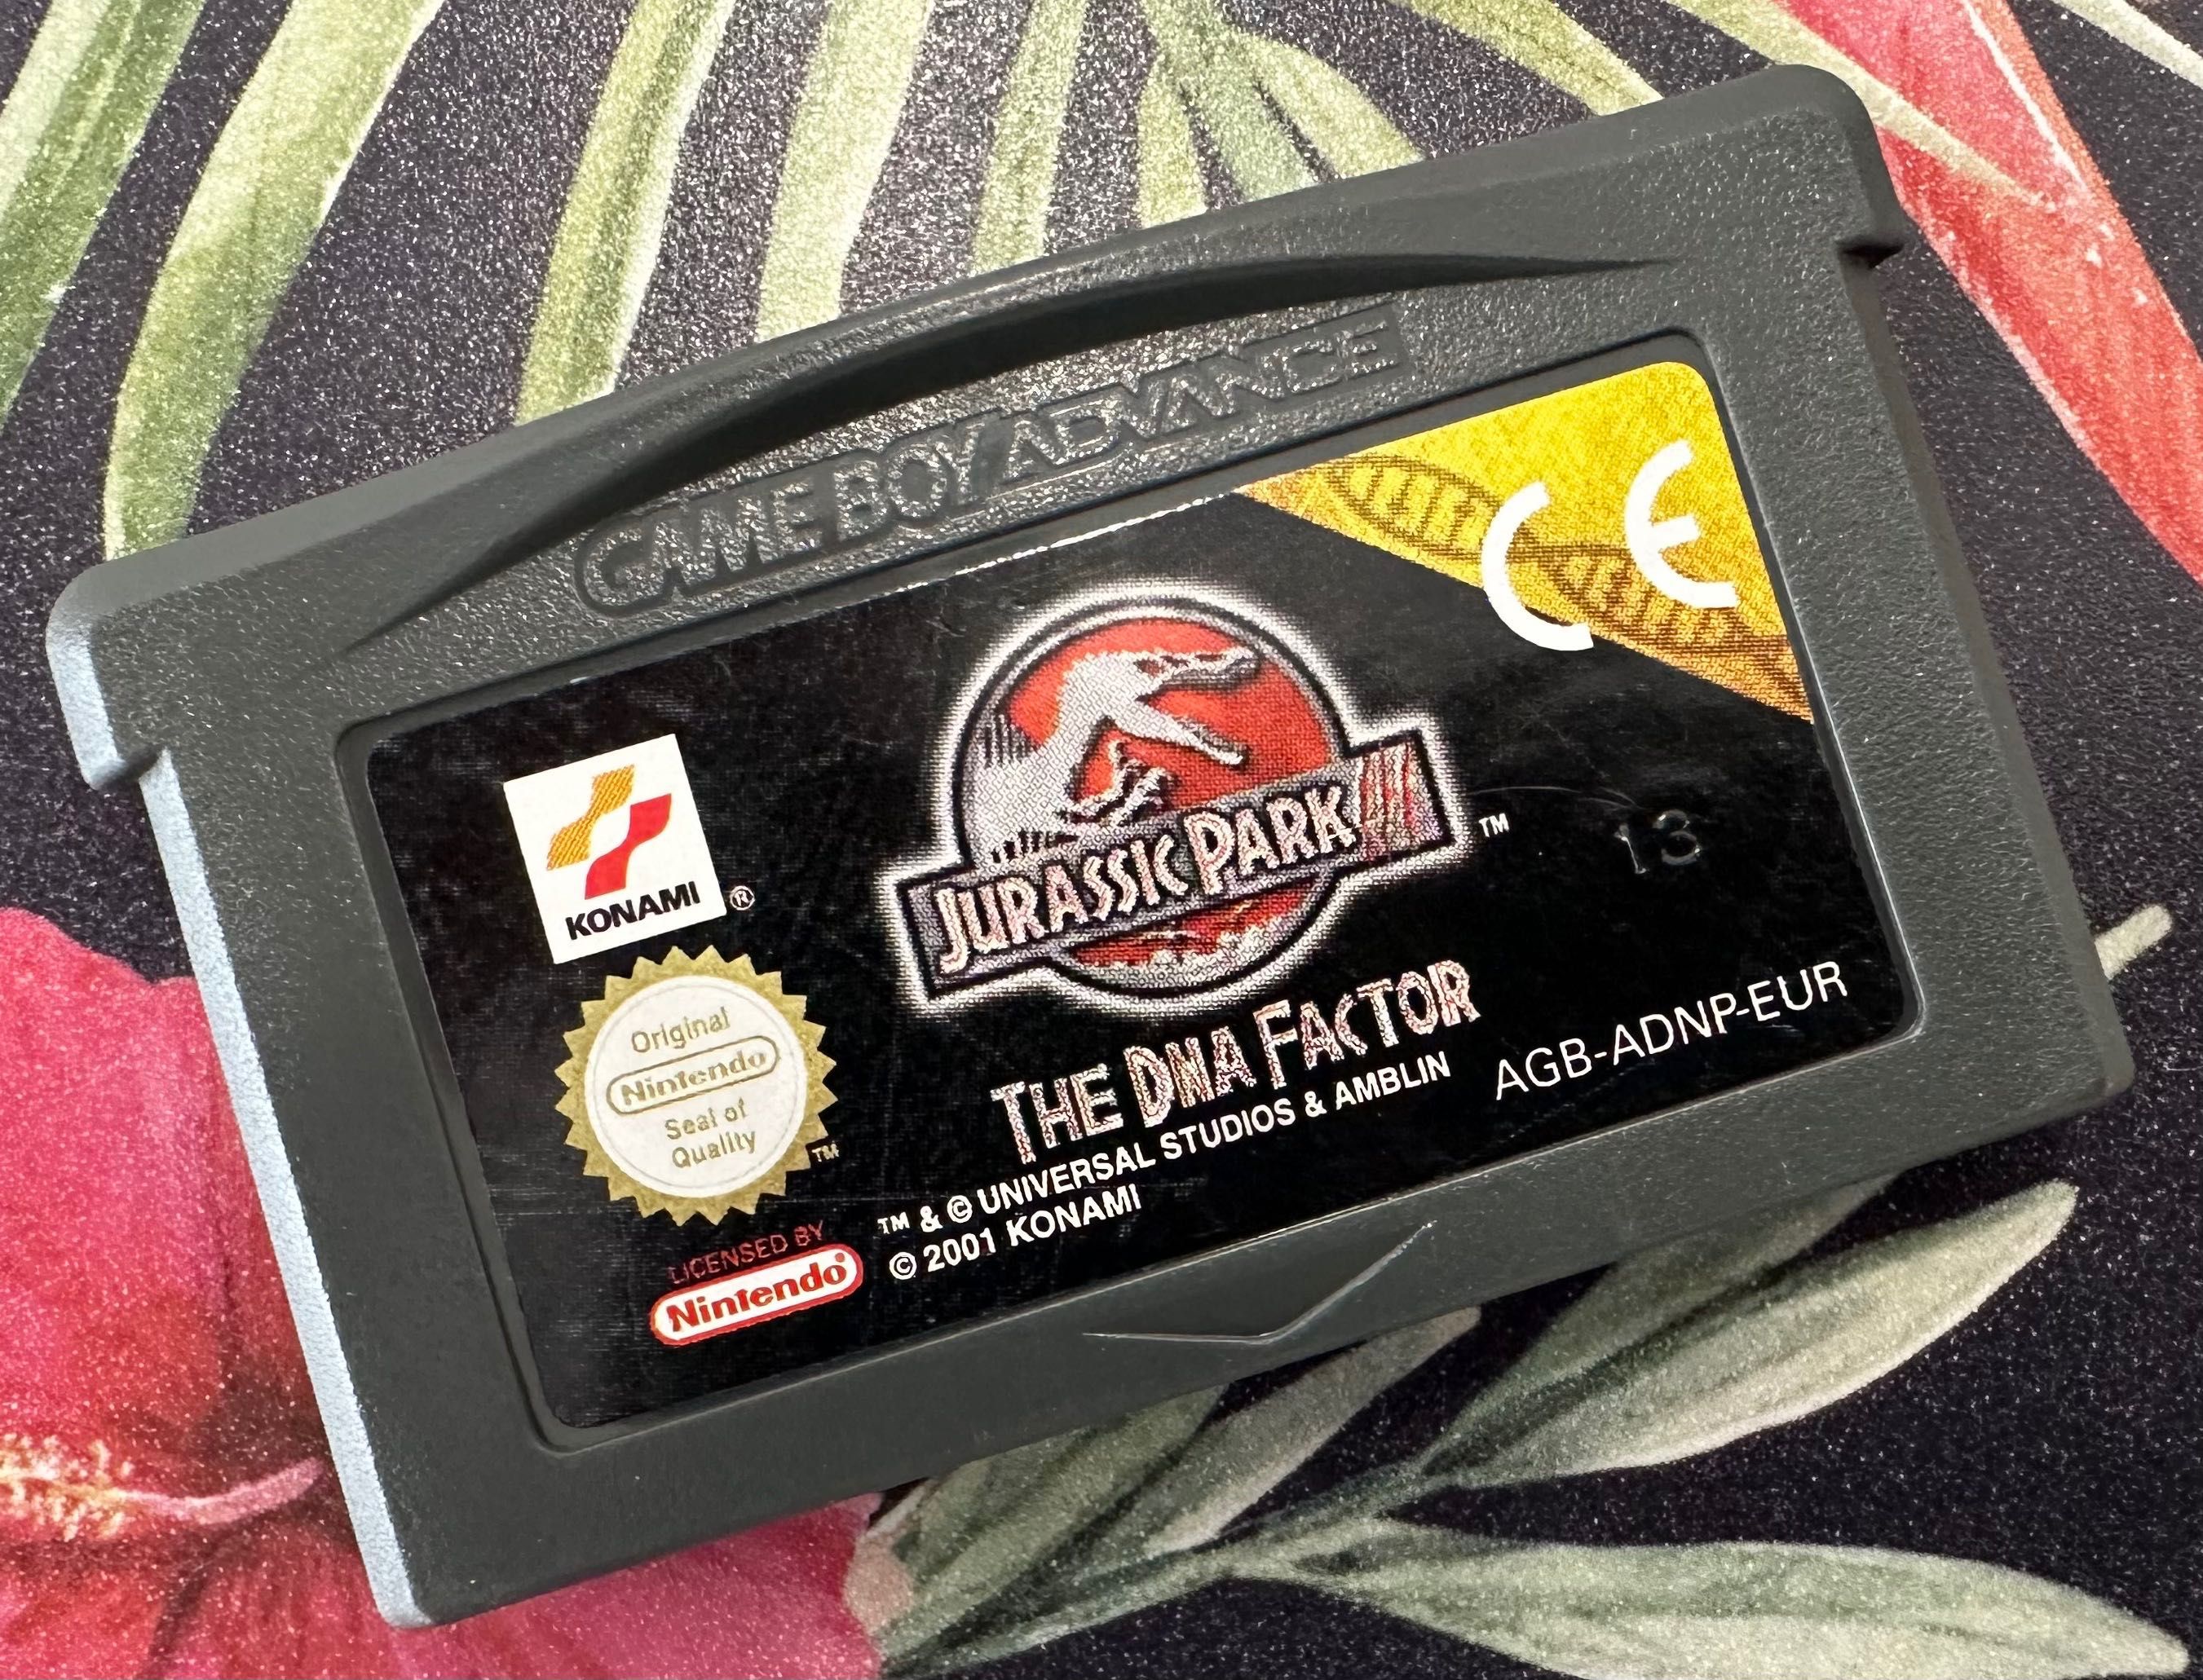 GameBoy Advance - "Jurassic Park The DNA Factor" (2001)